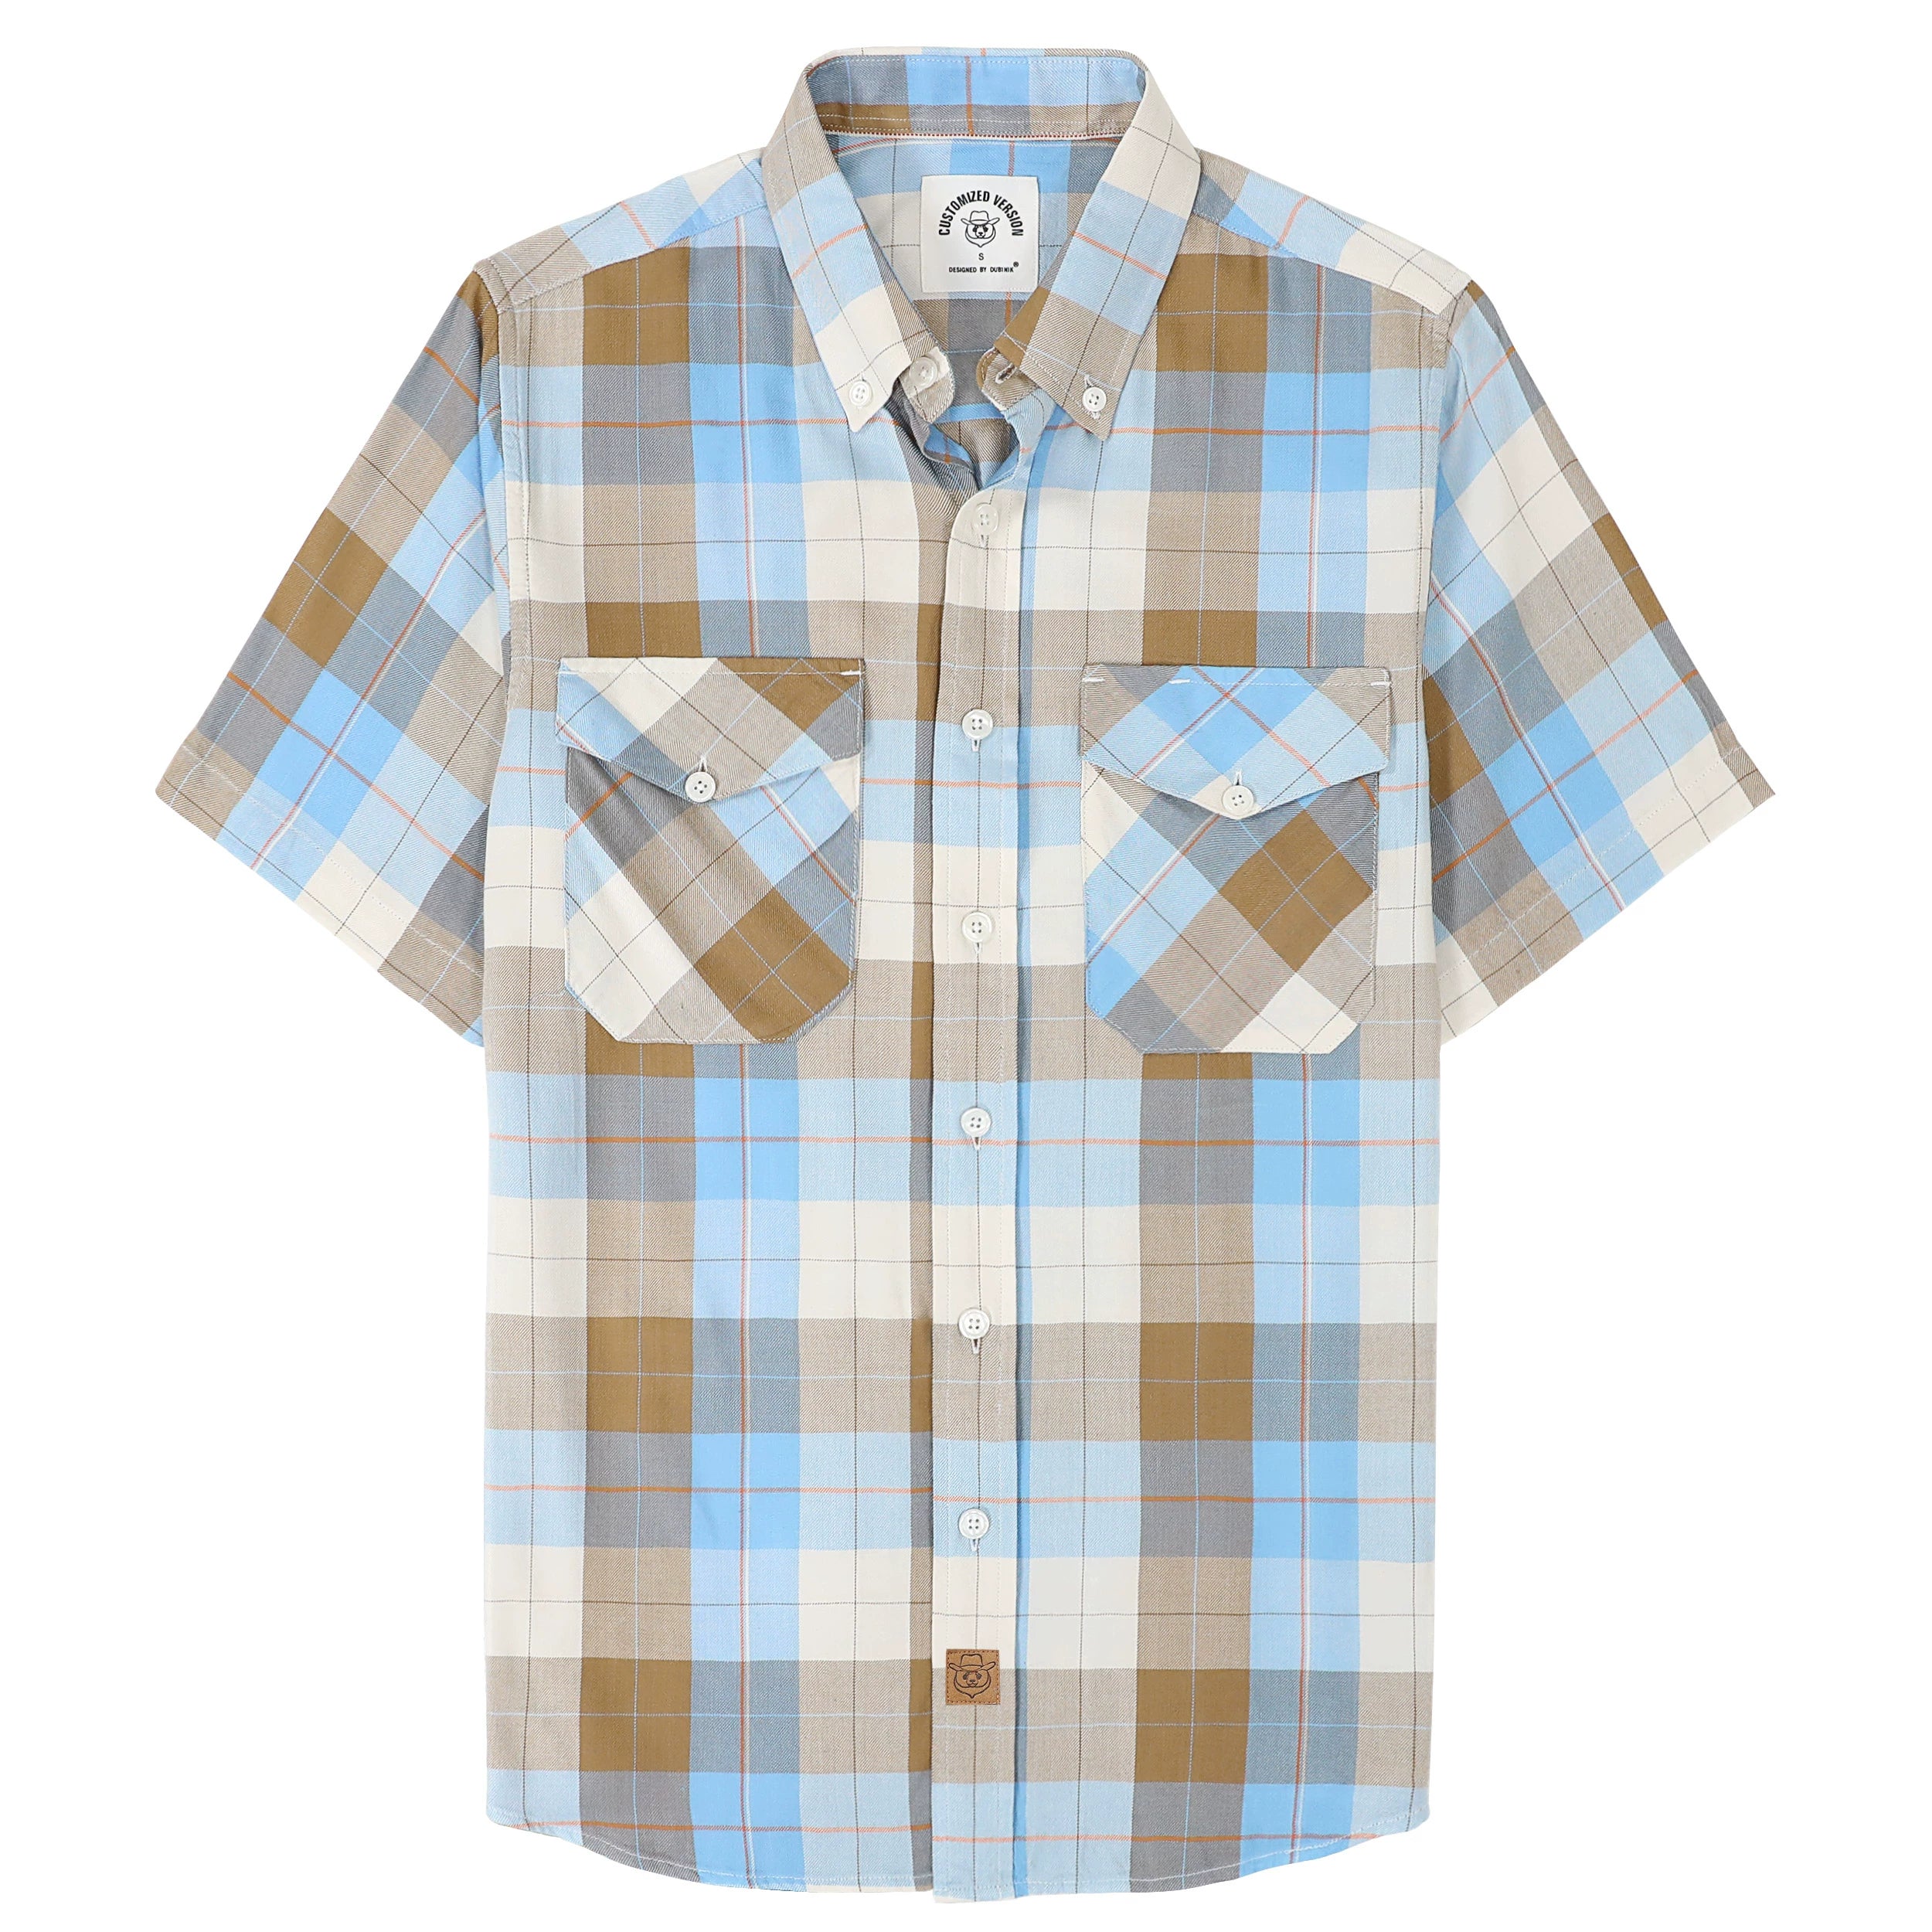 Dubinik® Bamboo Viscose Mens Short Sleeve Button Down Pockets Shirts#39701